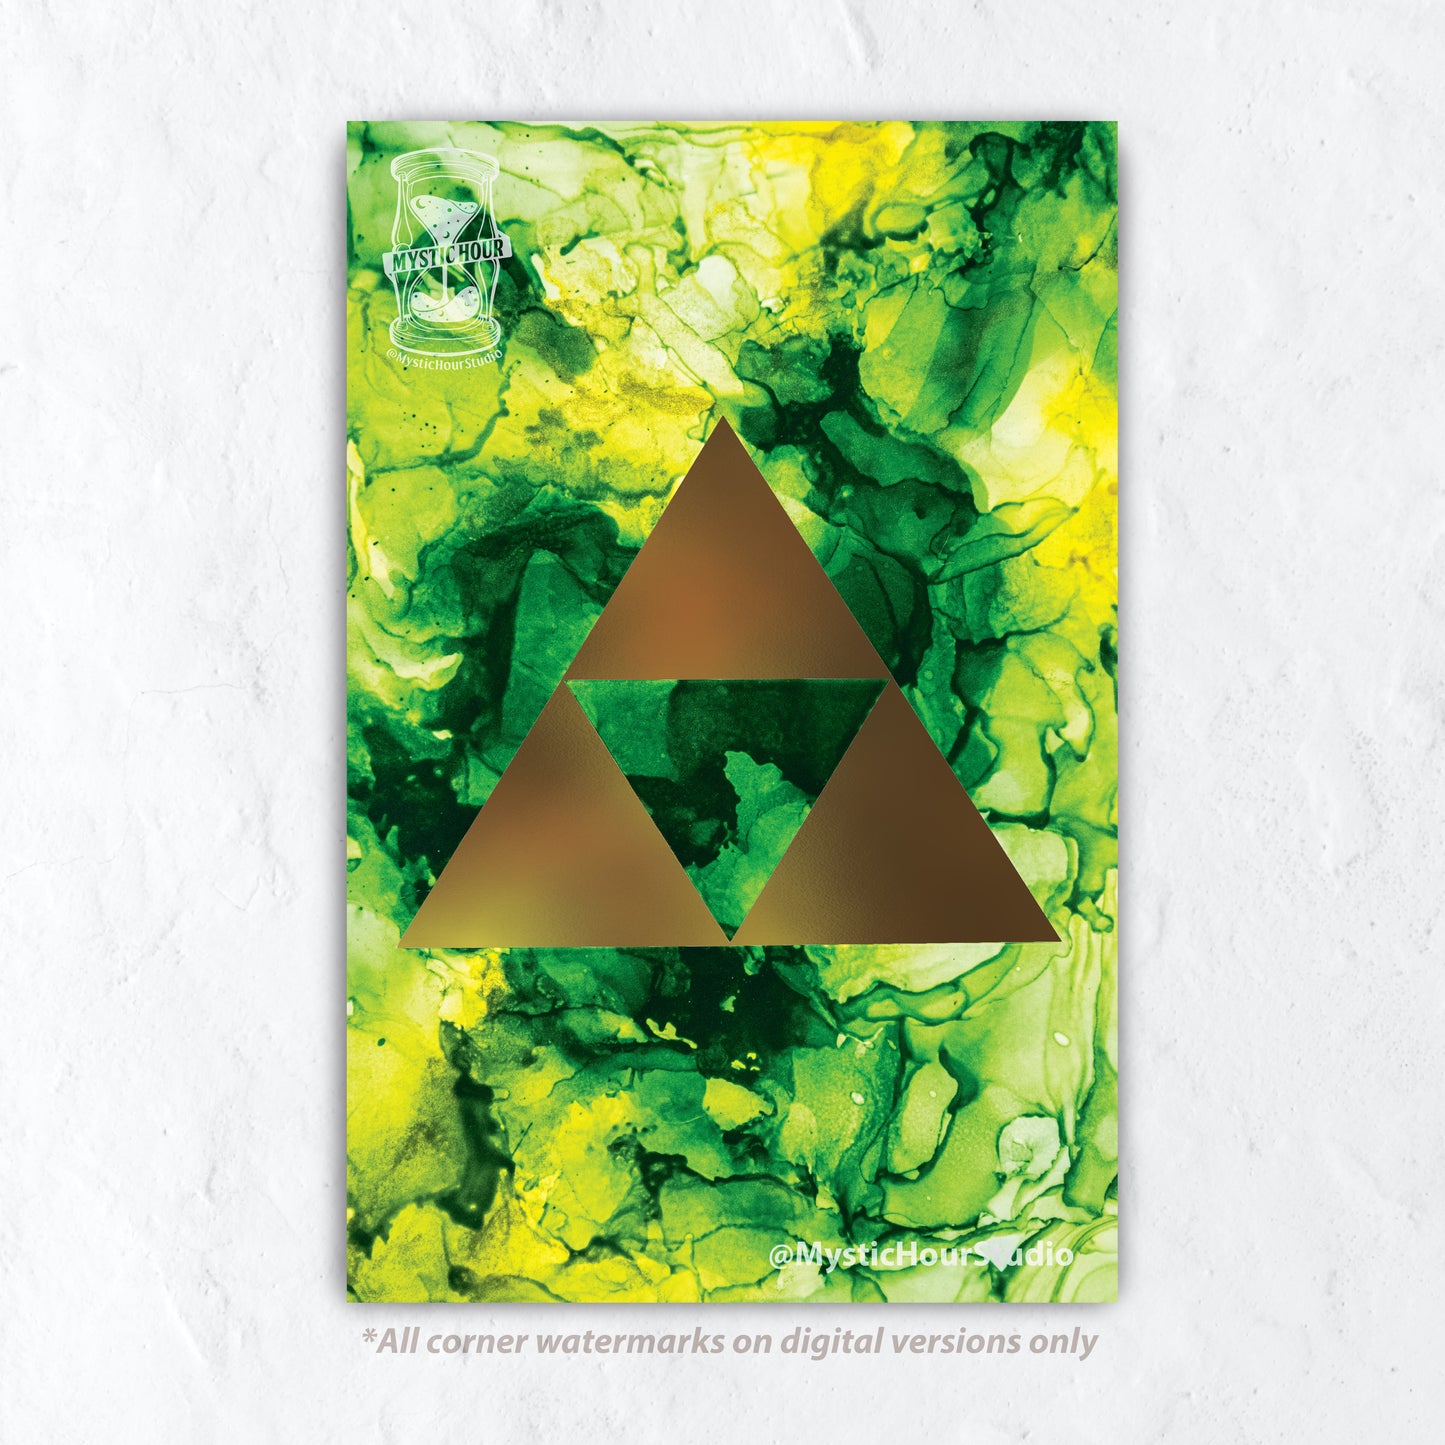 Limited Edition Triforce Gold Foil Print